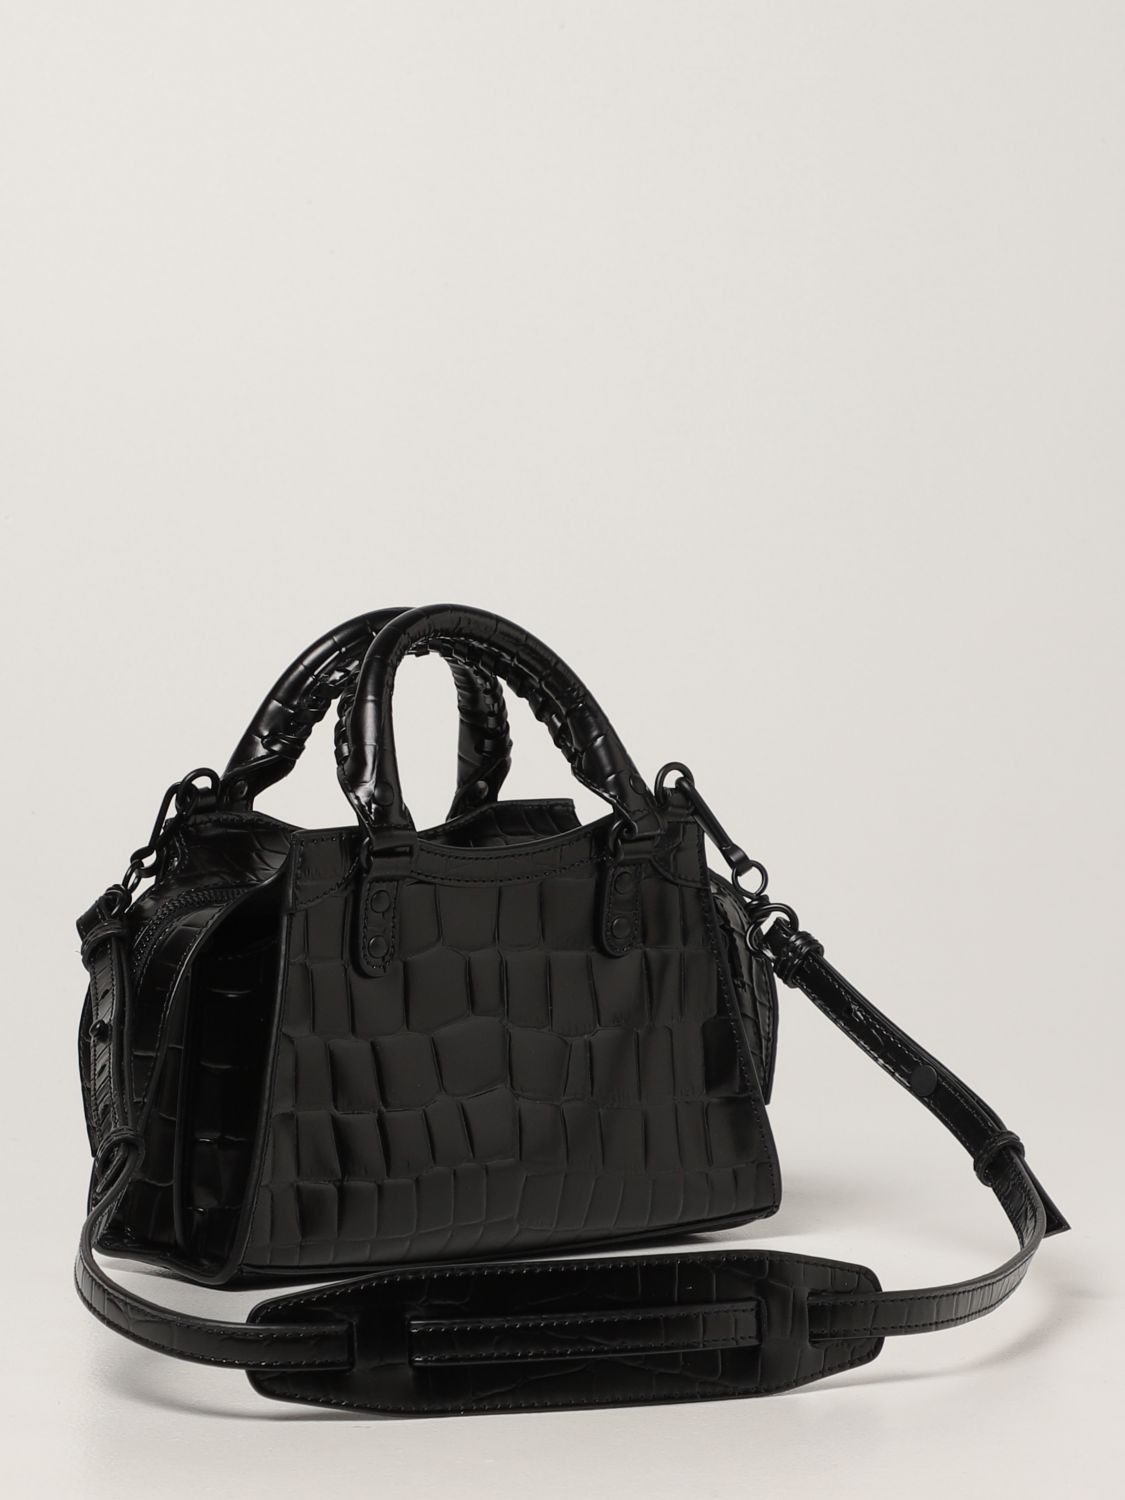 Balenciaga Neo Classic Mini Steel Grey Crocodile Embossed Handbag